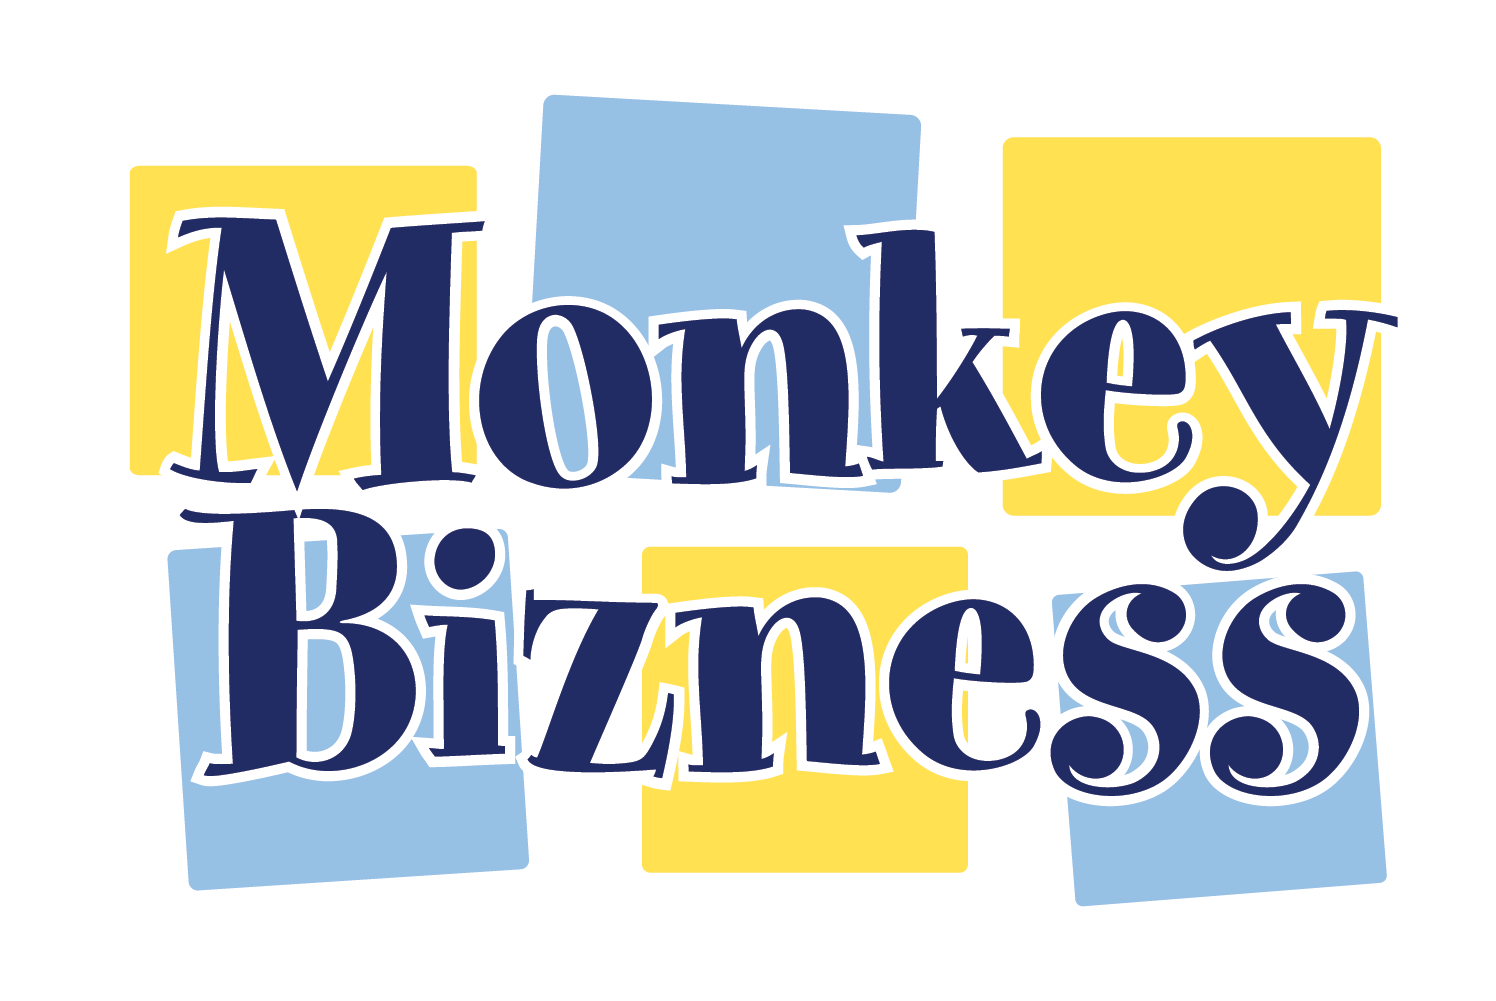 Little Monkey Bizness - Colorado Springs